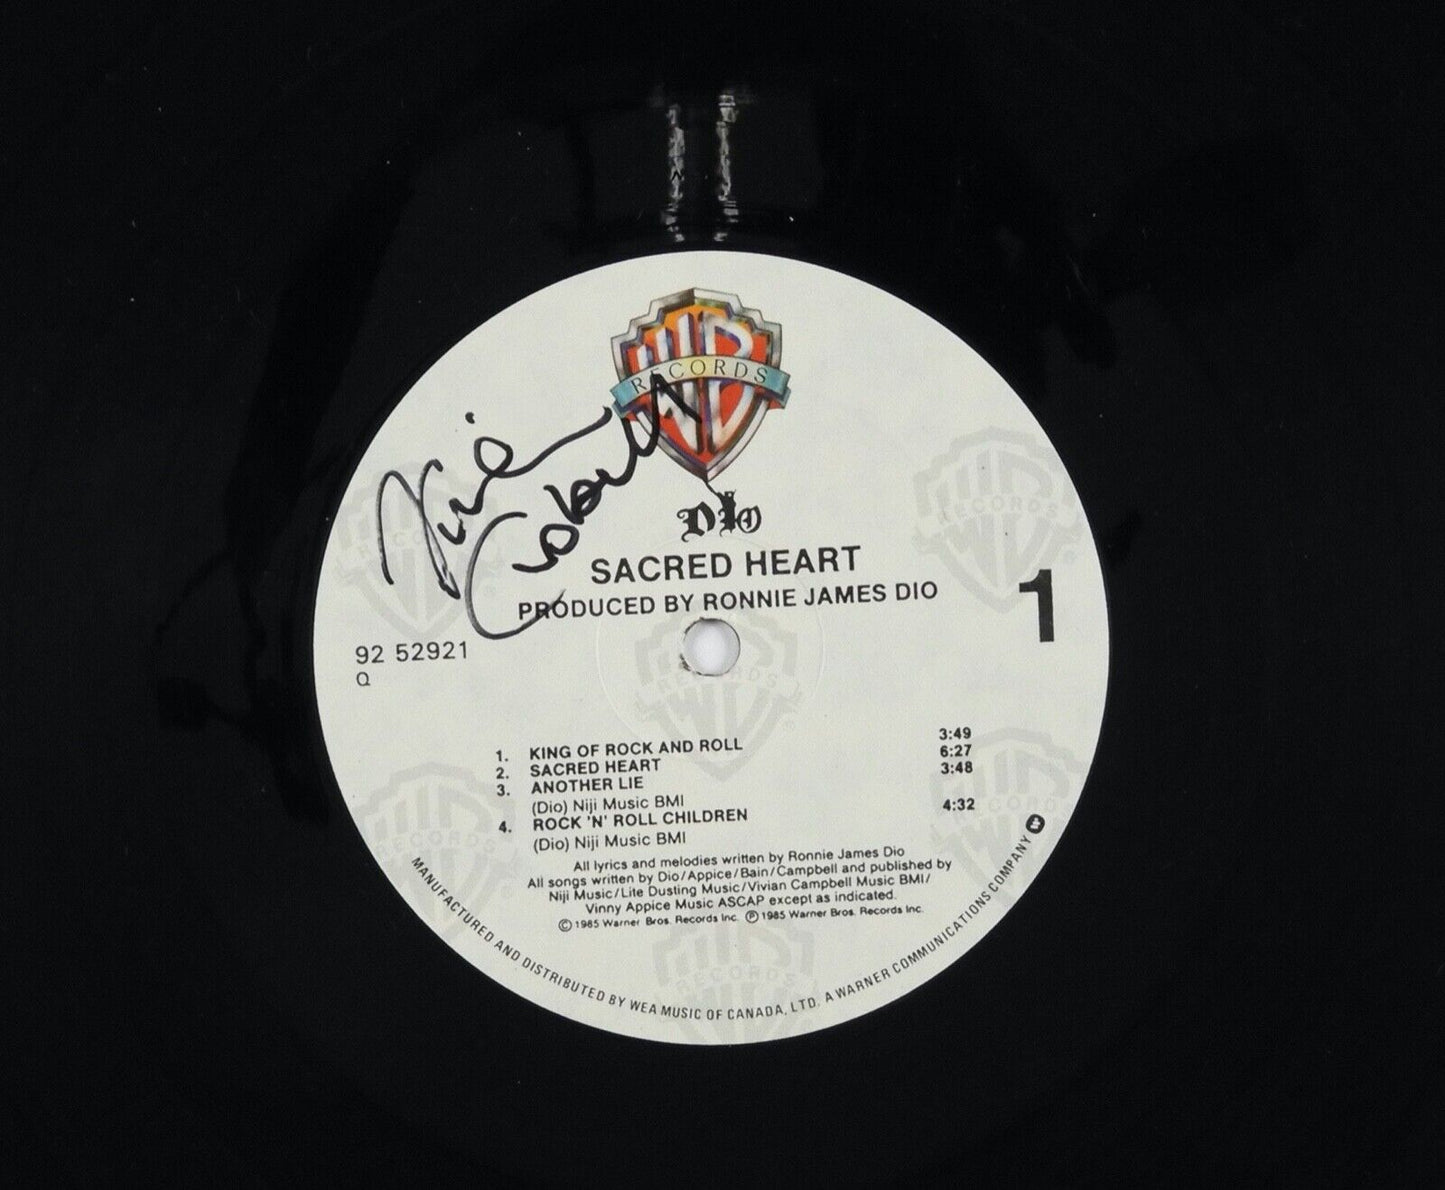 DIO Vivian Campbell Signed Autograph Record Album JSA Vinyl LP